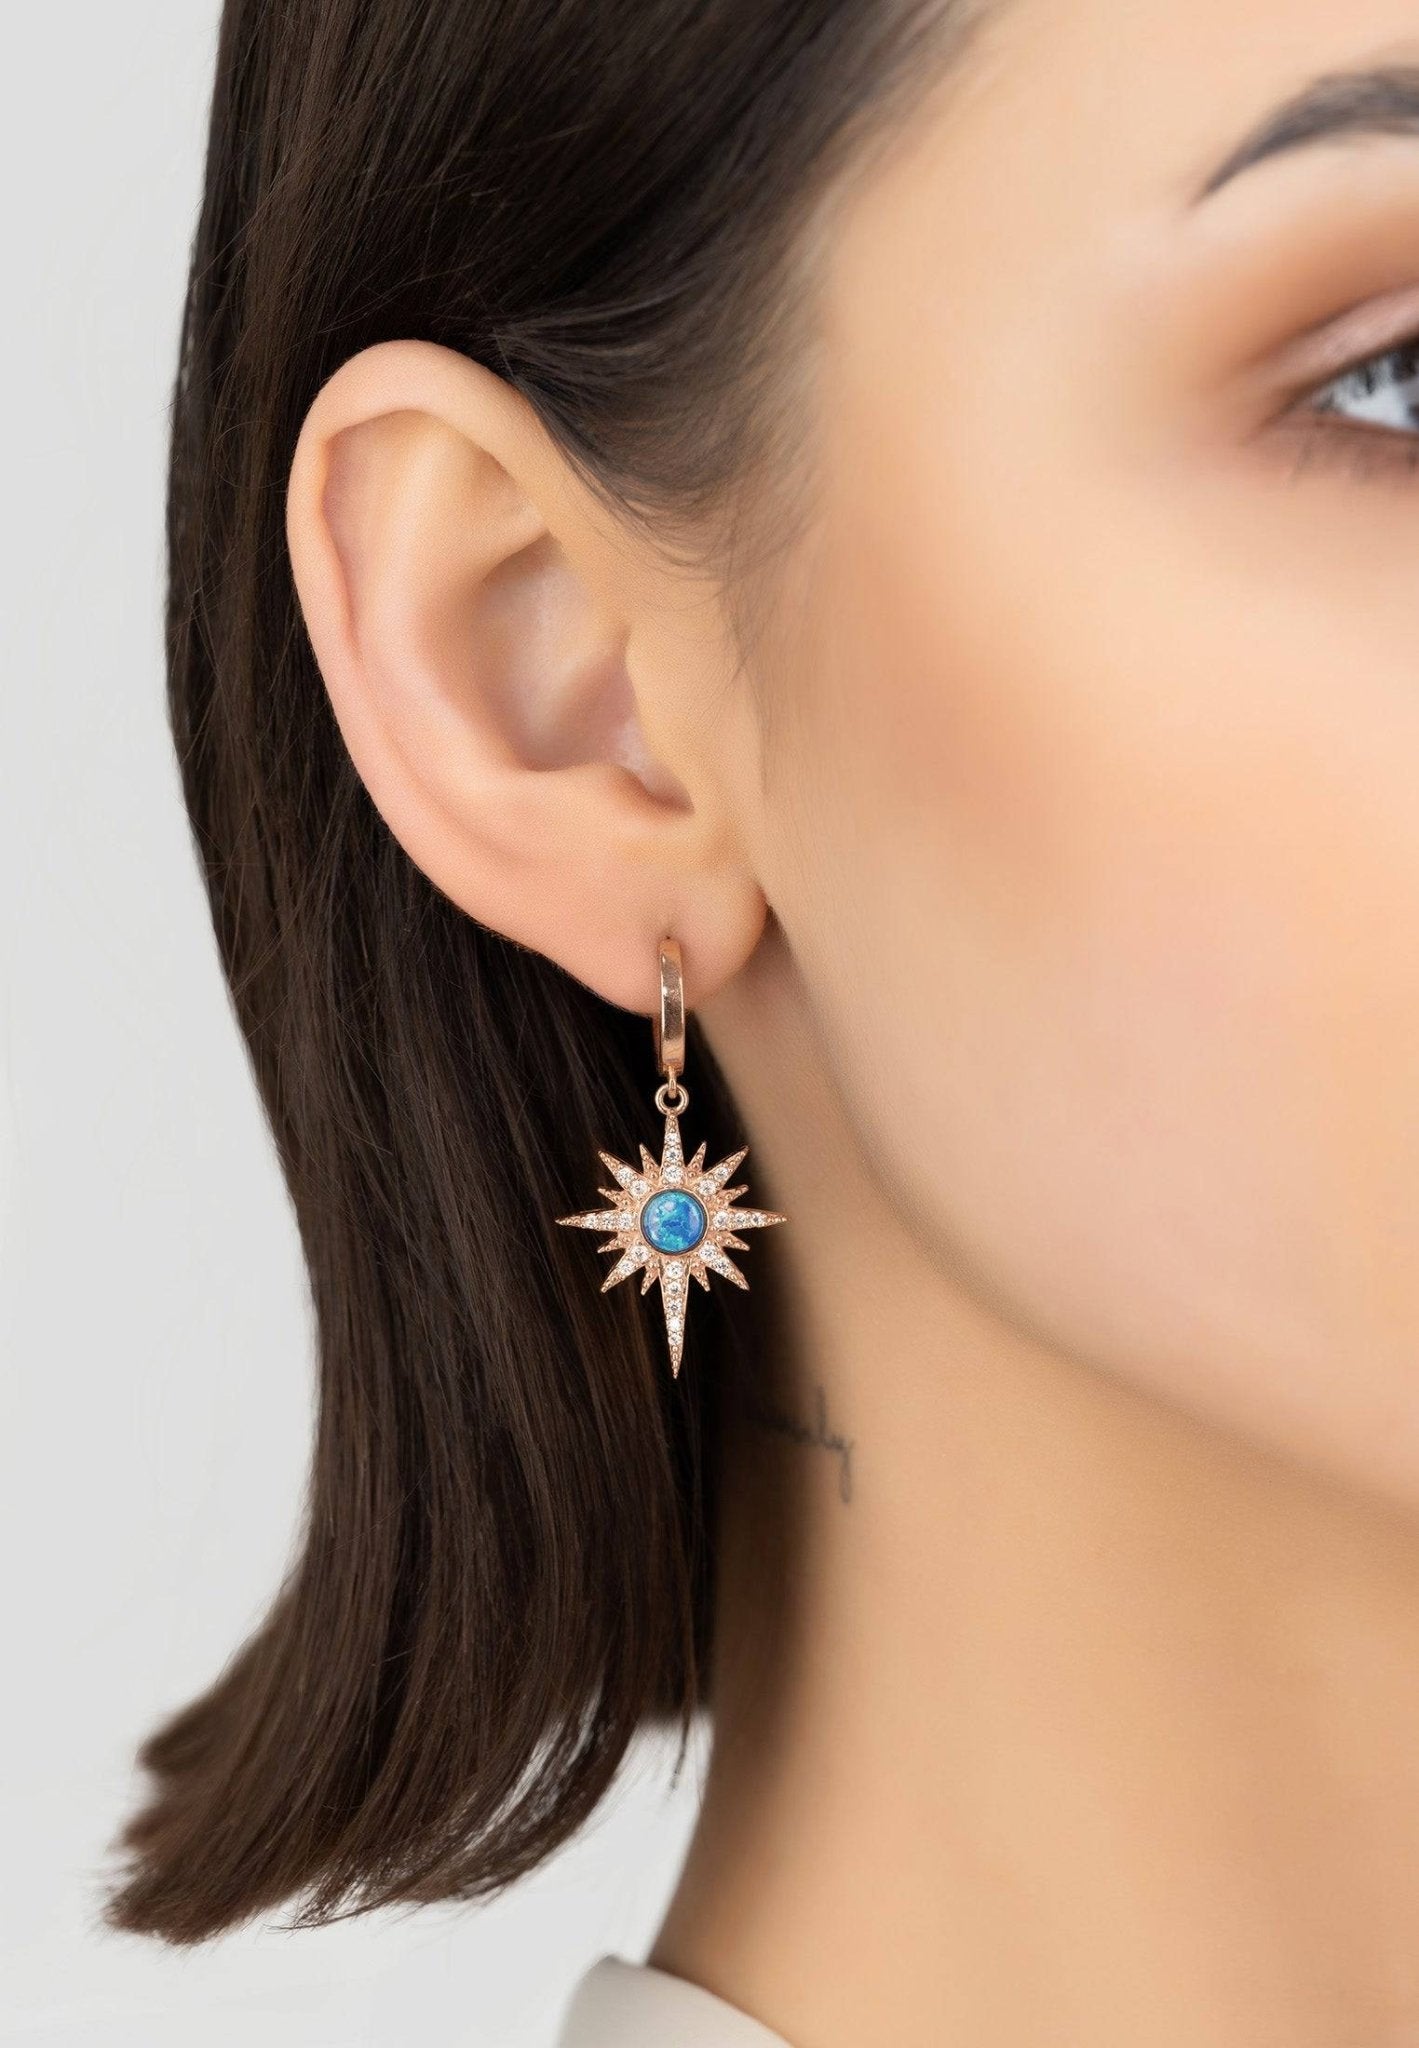 Apollo Opalite Blue Sunburst Earrings Rosegold - LATELITA Earrings